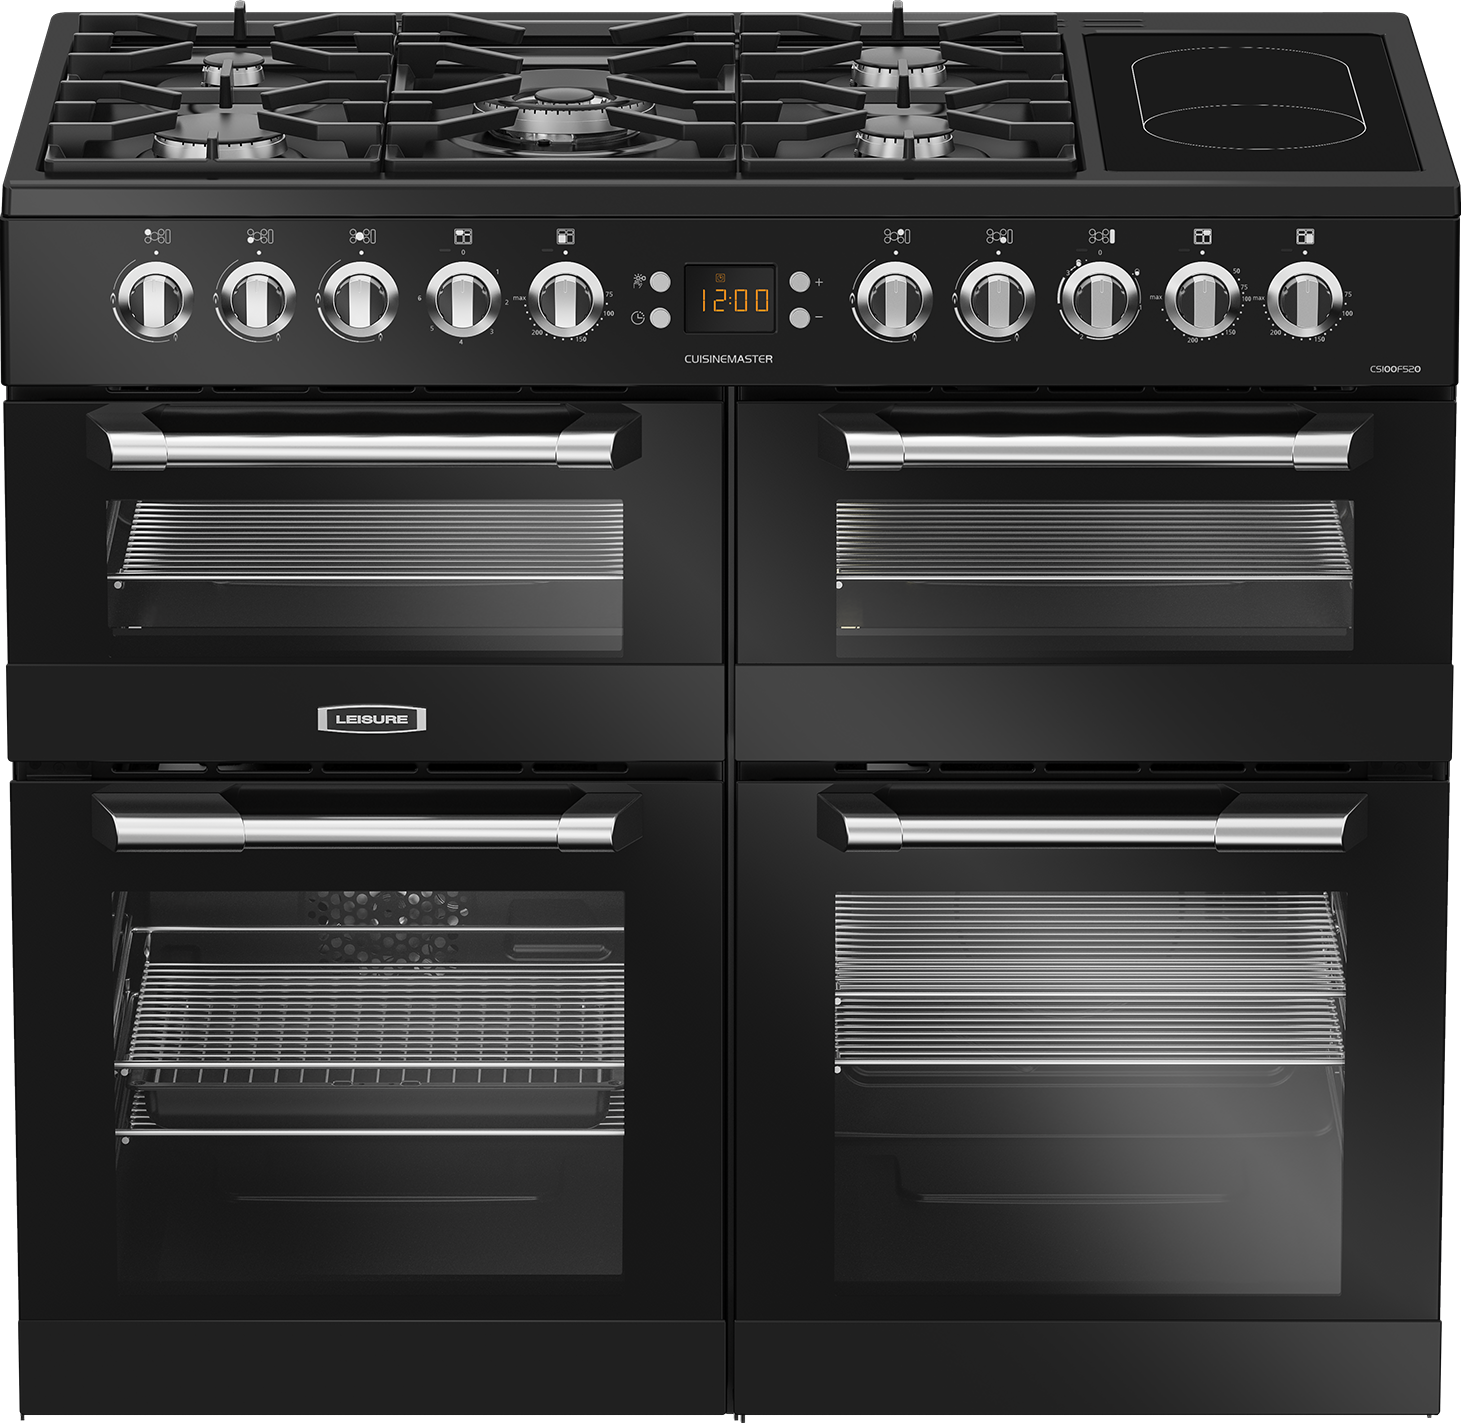 Leisure Cuisinemaster CS100F520K 100cm Dual Fuel Range Cooker - Black - A/A/A Rated, Black